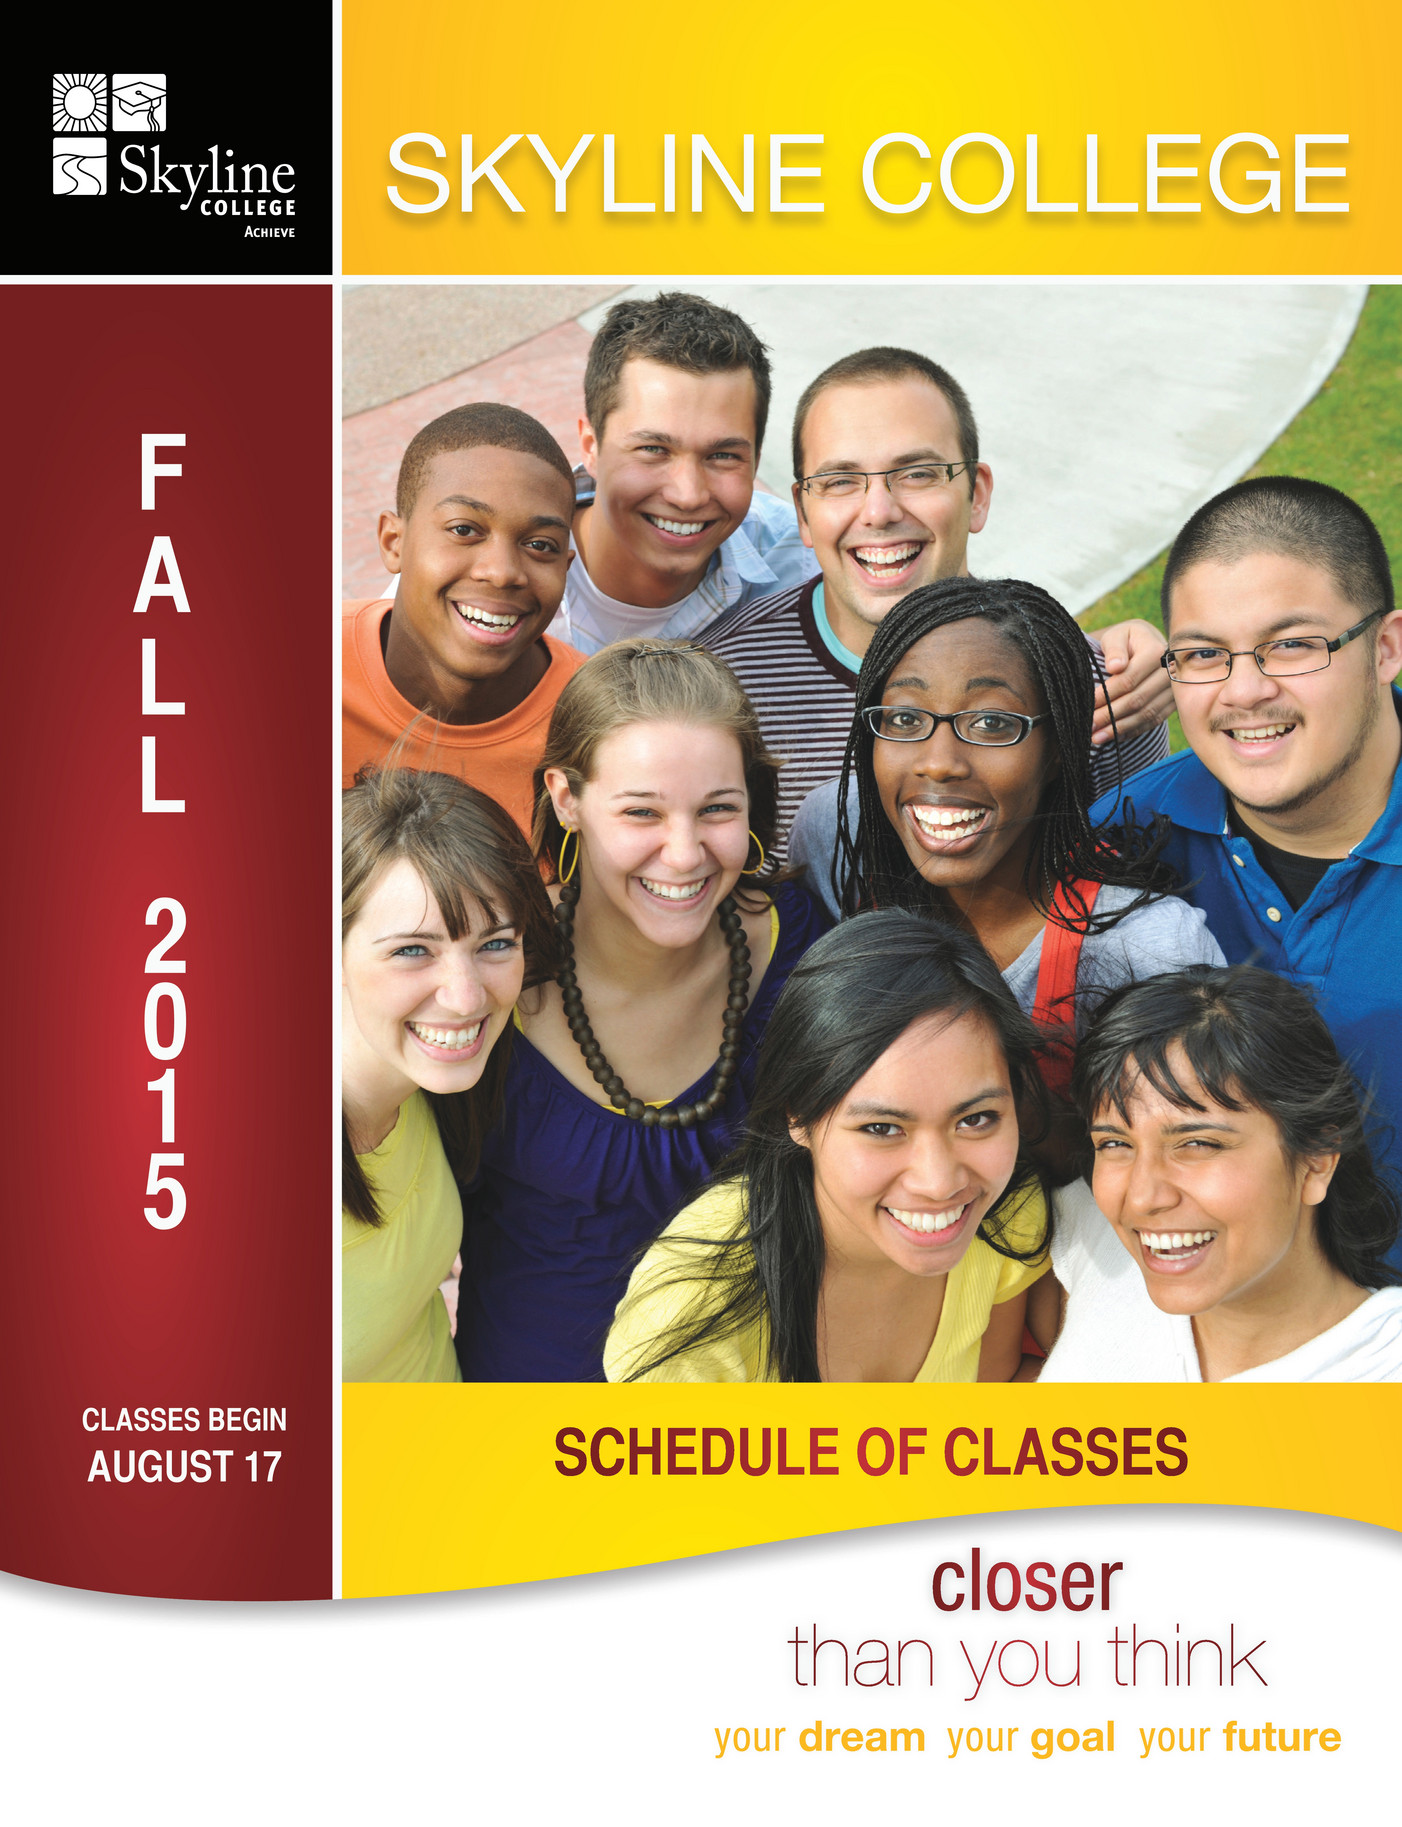 Skyline College Skyline College 2015 Fall Schedule Page 4445